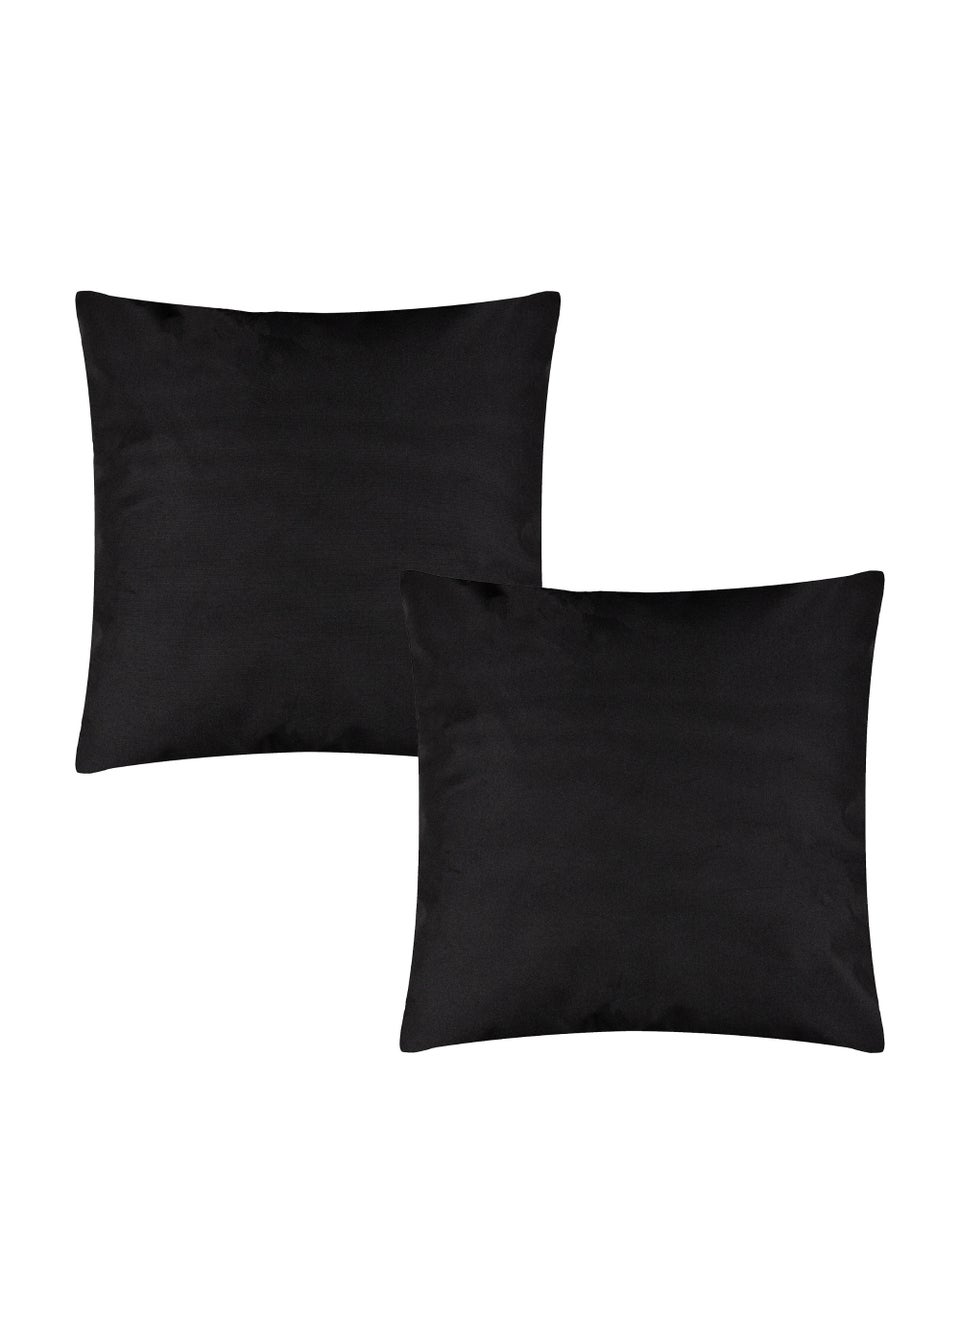 furn. Plain Reversible Outdoor Filled Cushion Twin Pack (43cm x 43cm x 8cm)